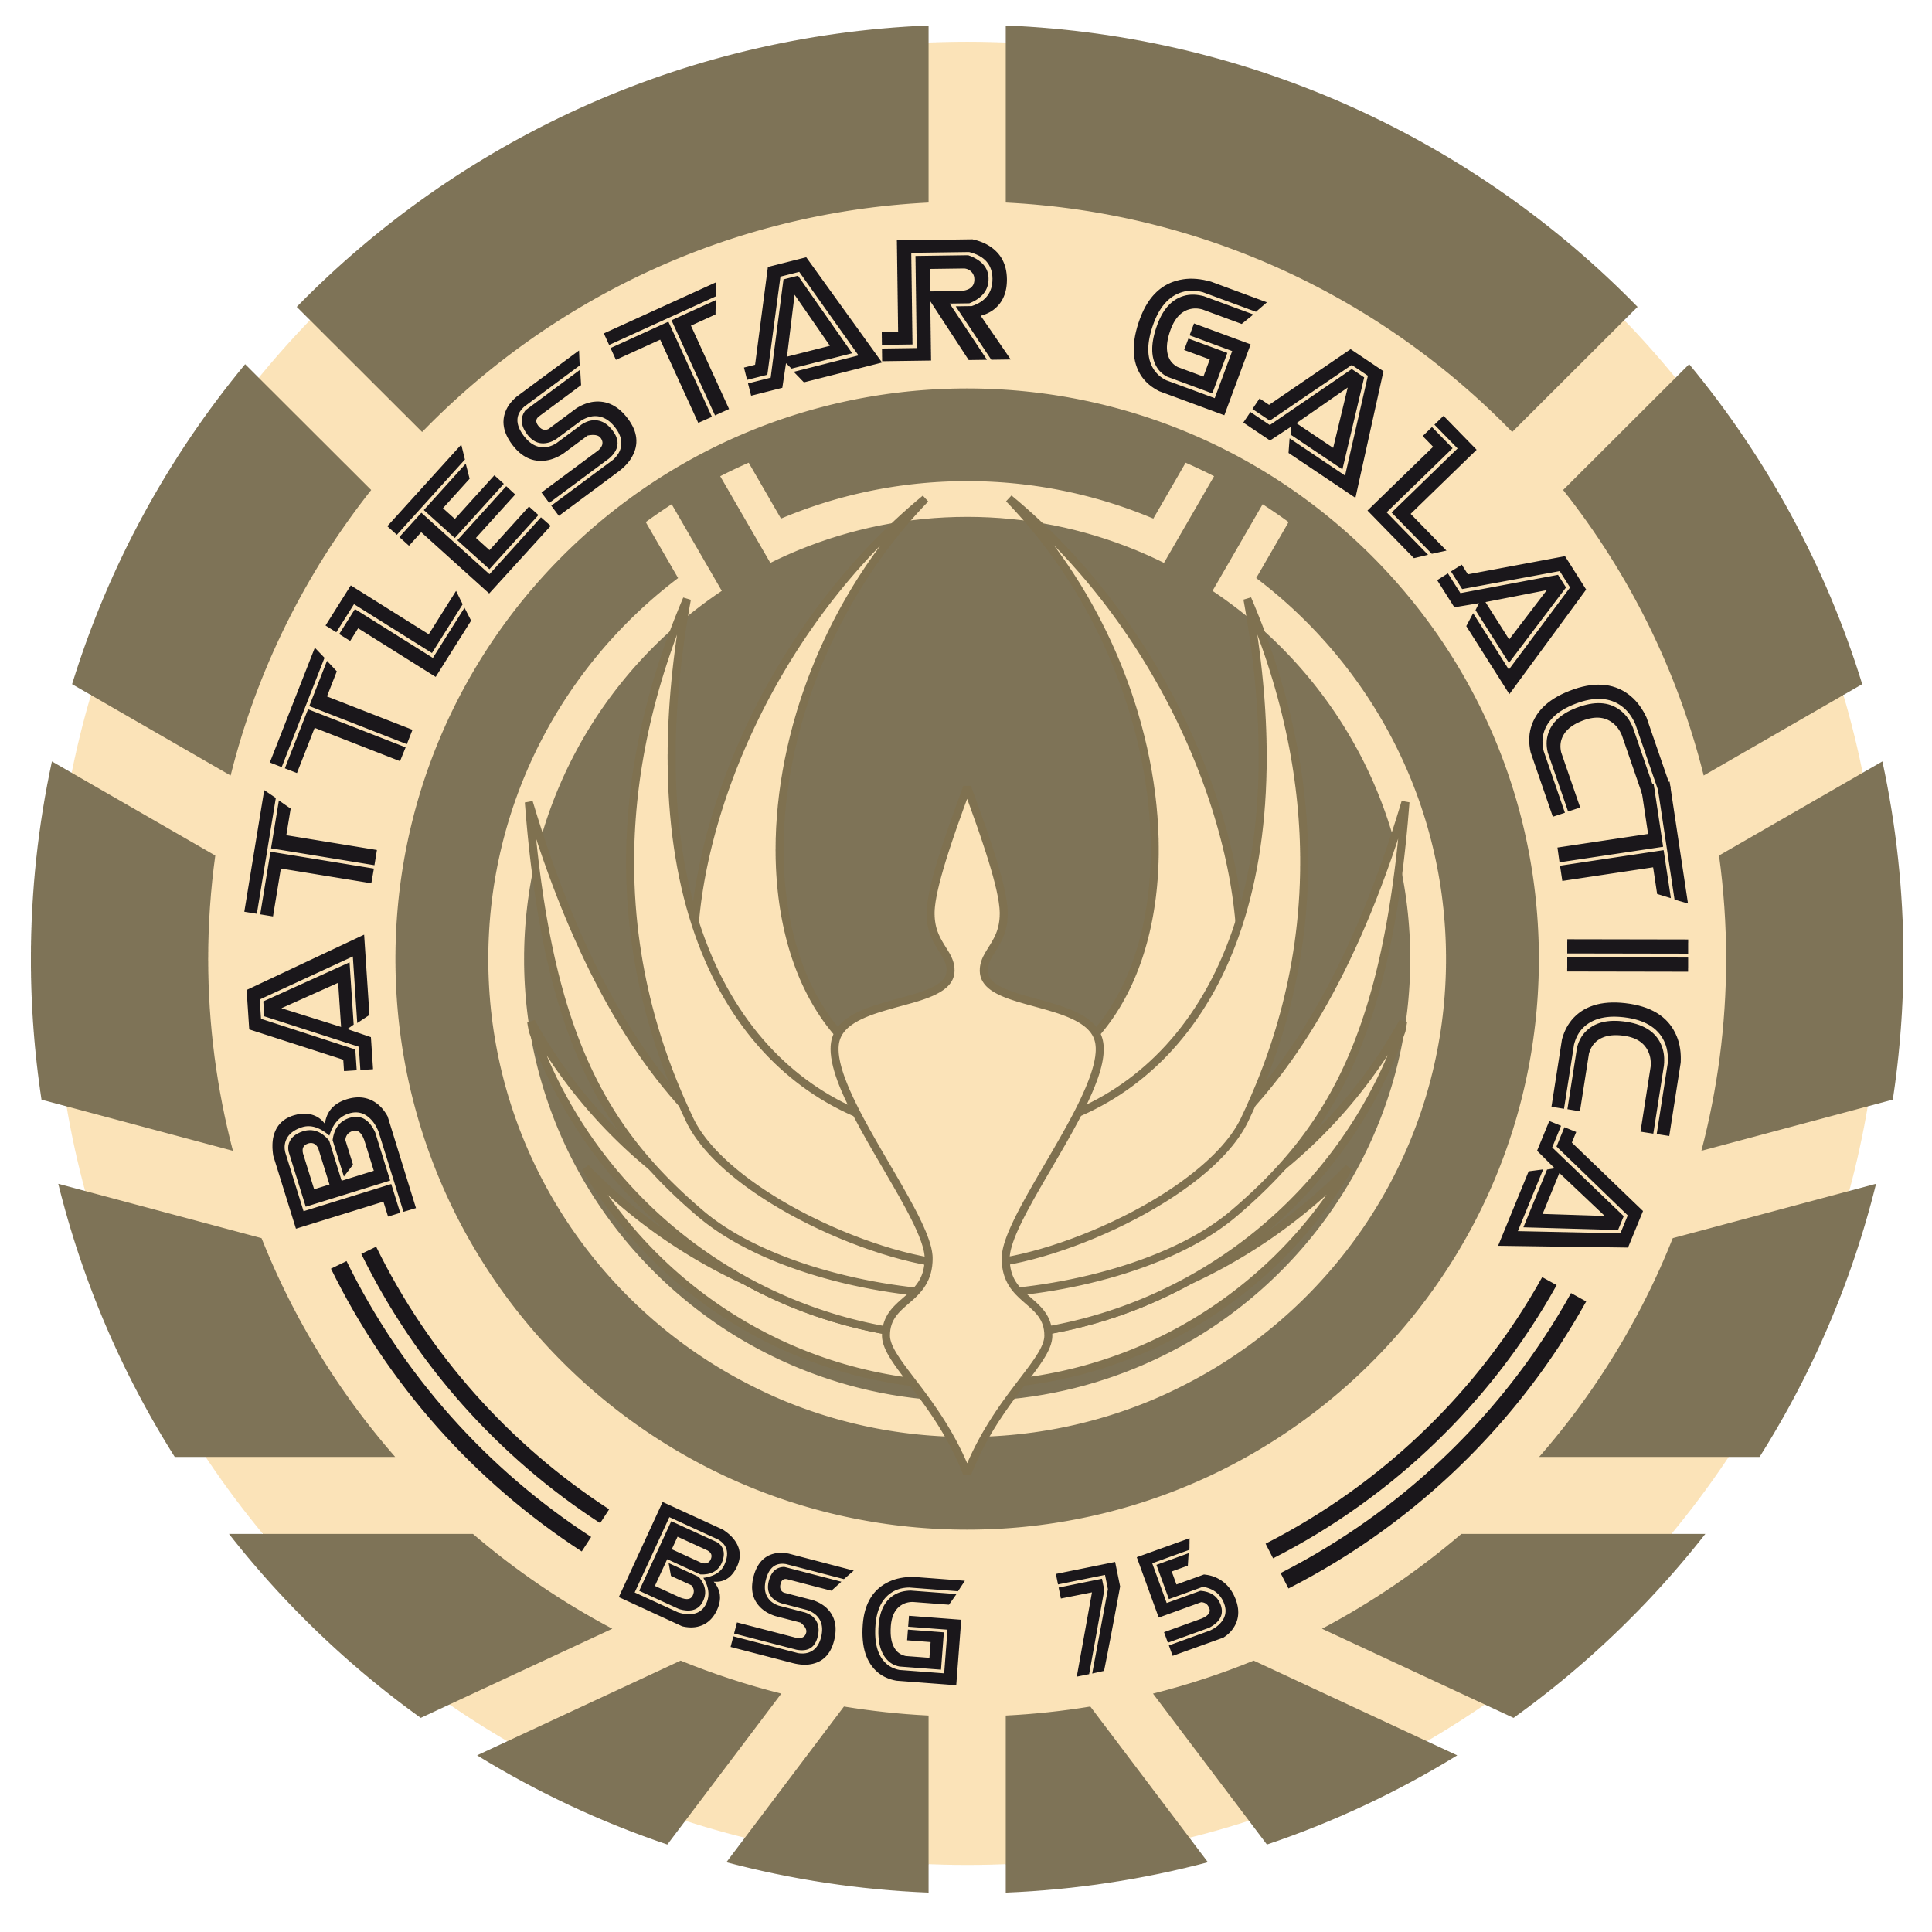 Stickers muraux: Battlestar Galactica